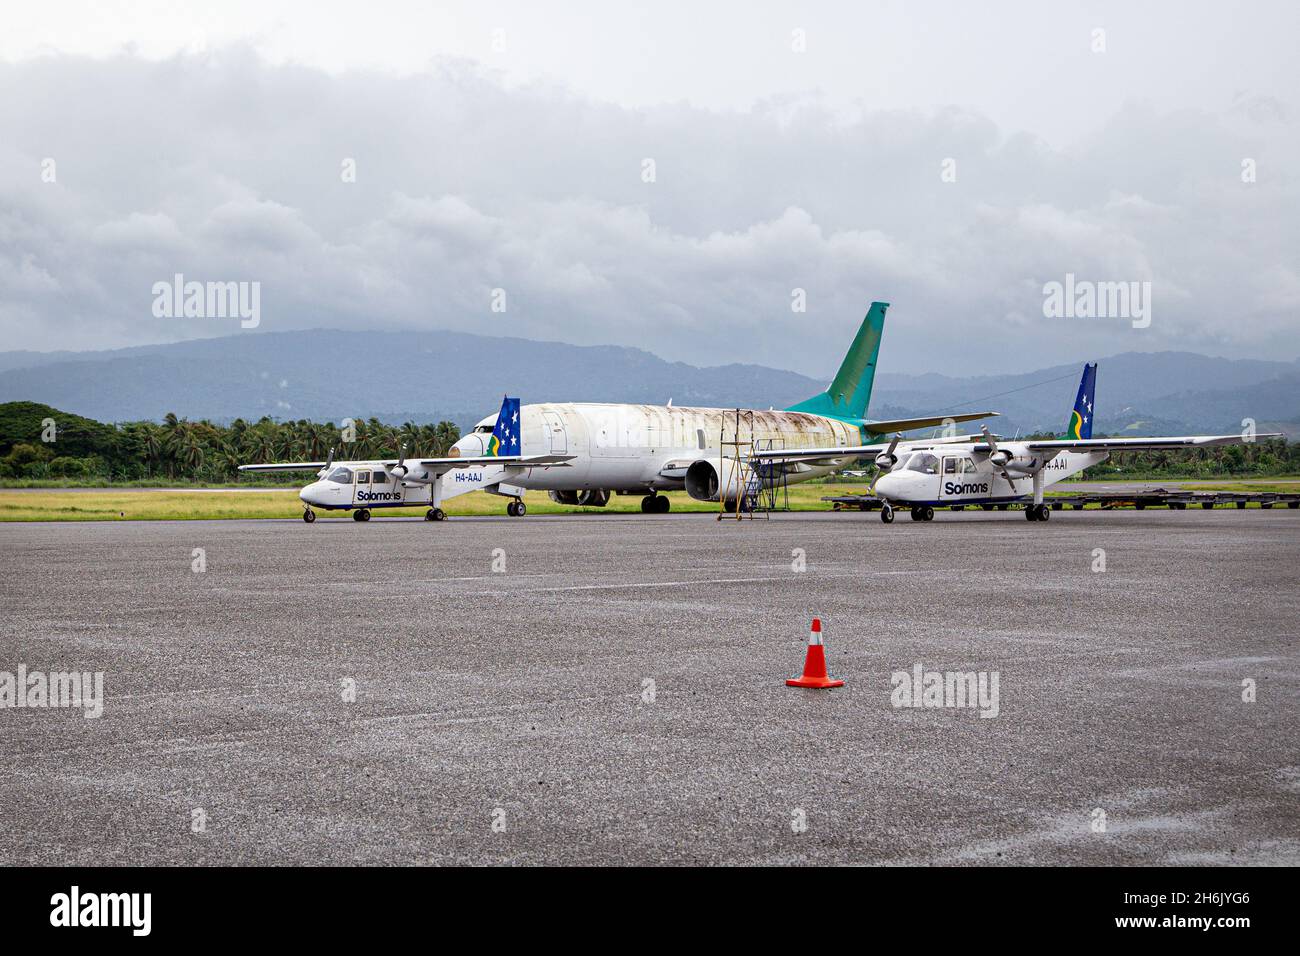 HONIARA, SOLOMON ISLANDS - Dec 30, 2015: Two Solomon Airlines planes ...